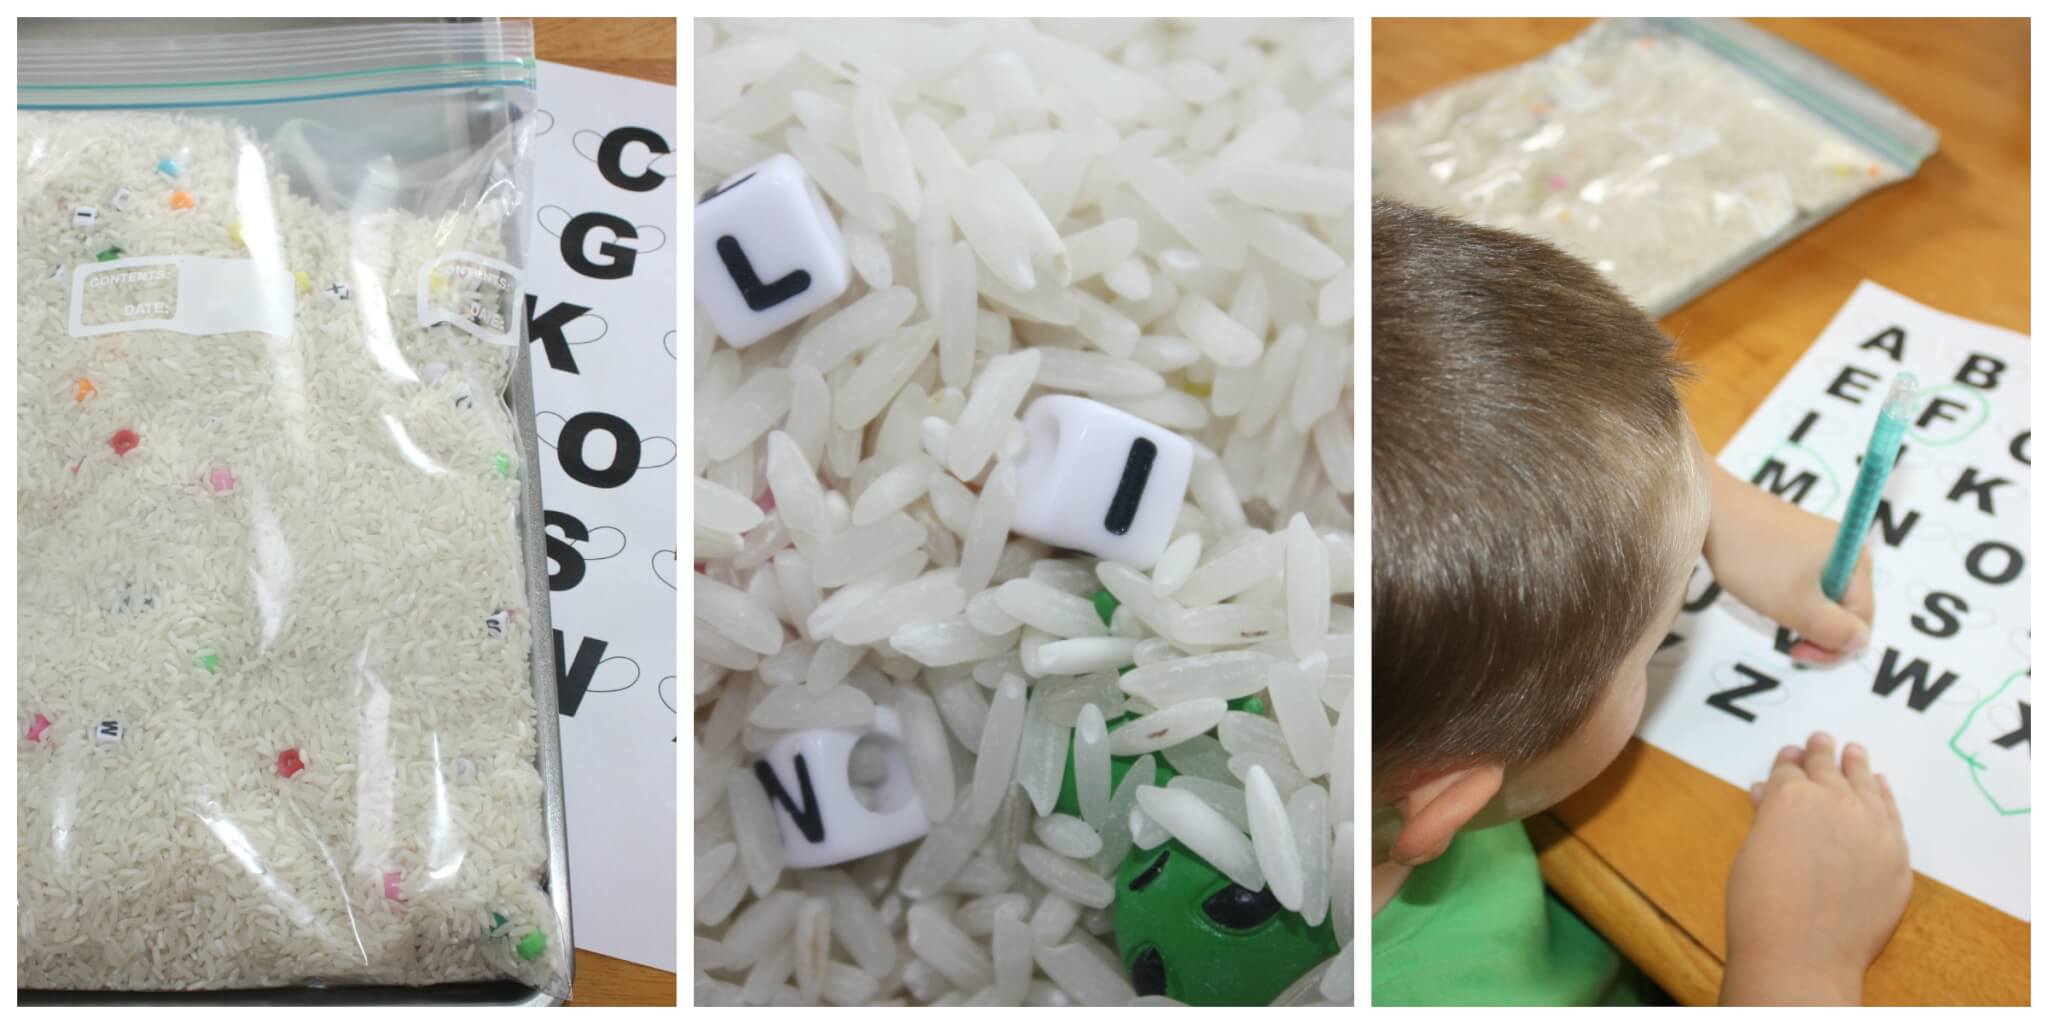 Three photo panels, each depicting a sensory rice bag/alphabet activity as an example of alphabet activities